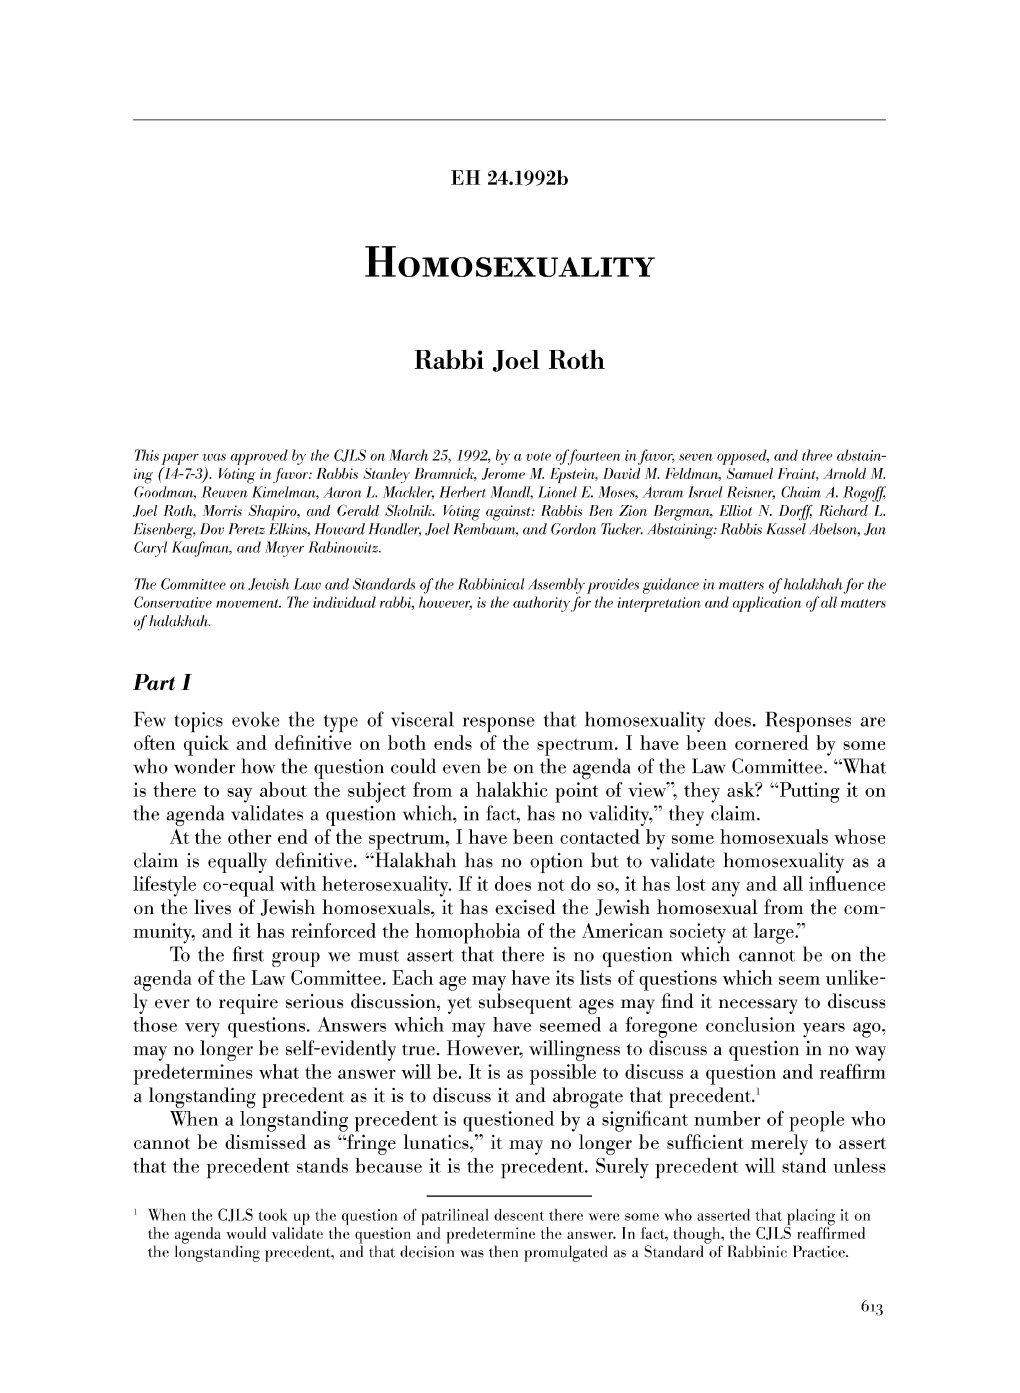 Homosexuality Rabbi Joel Roth